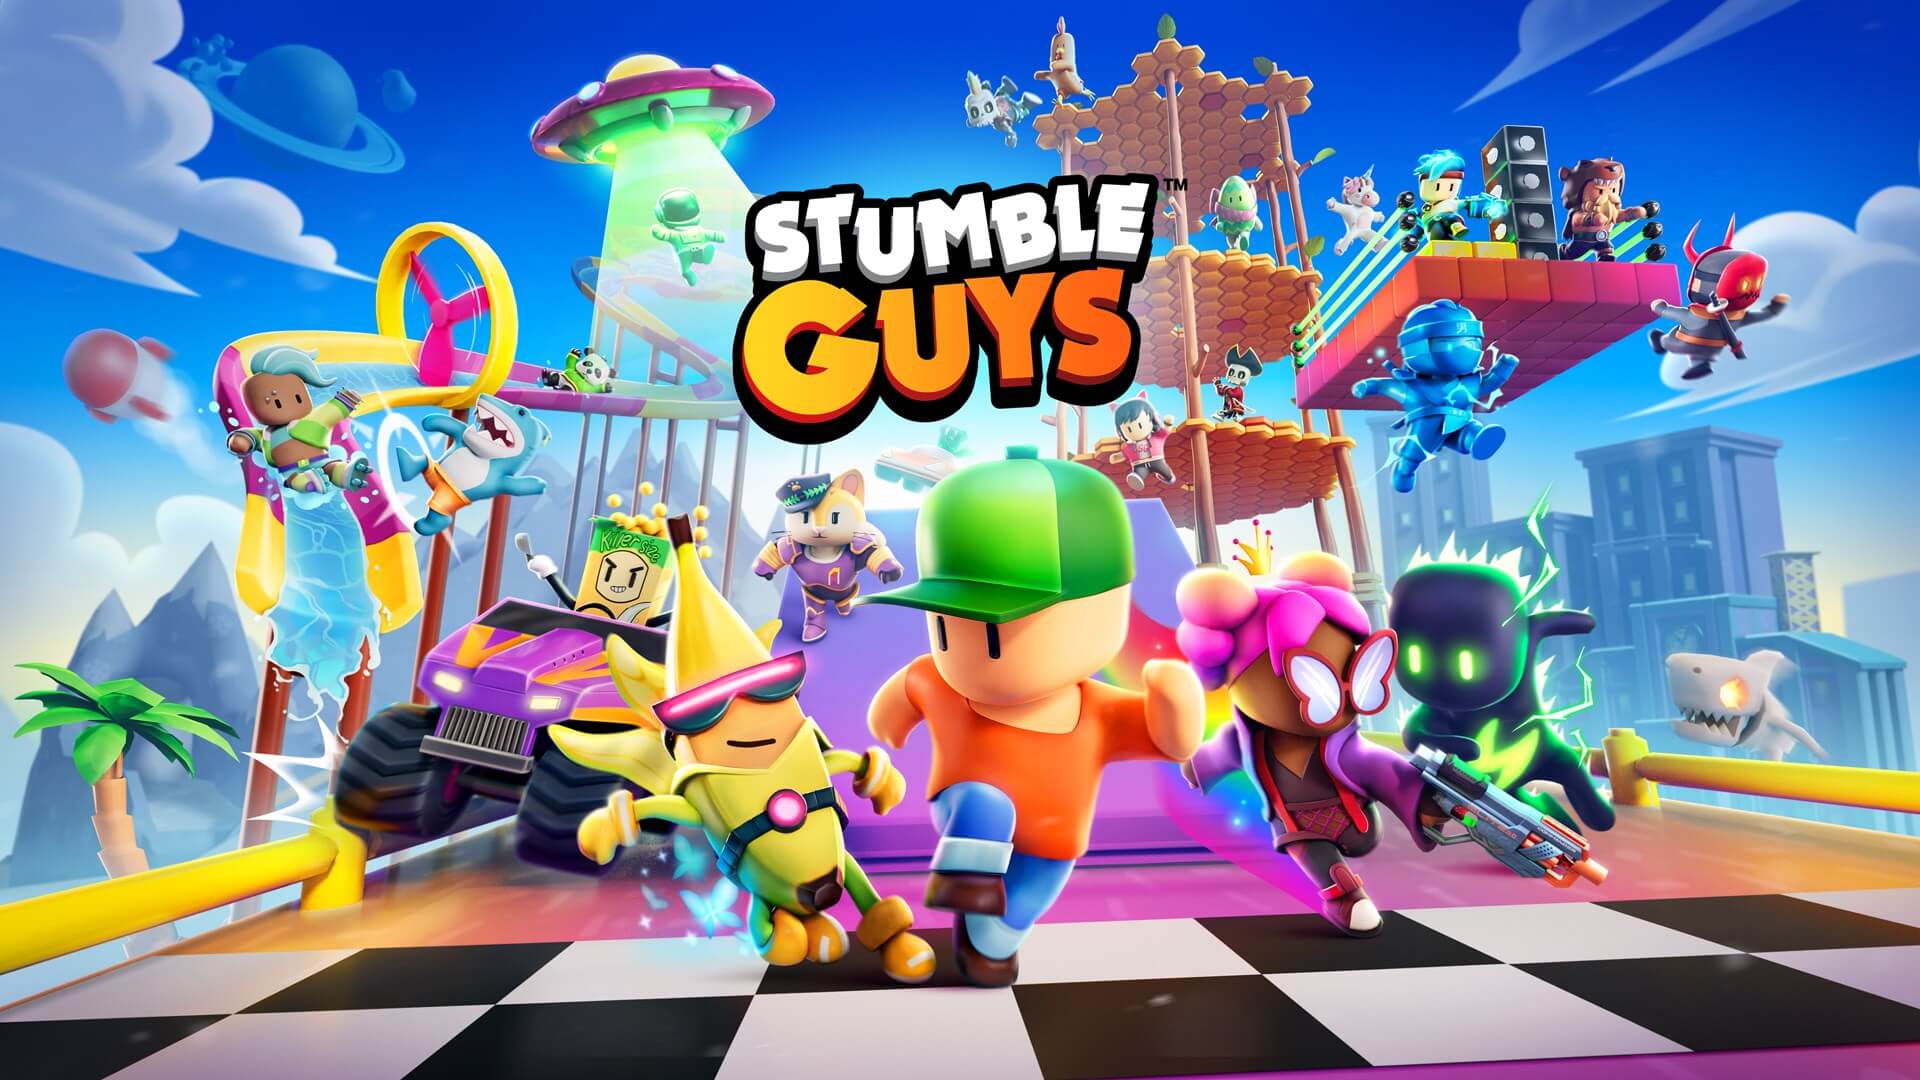 Stumble Guys Banner Image